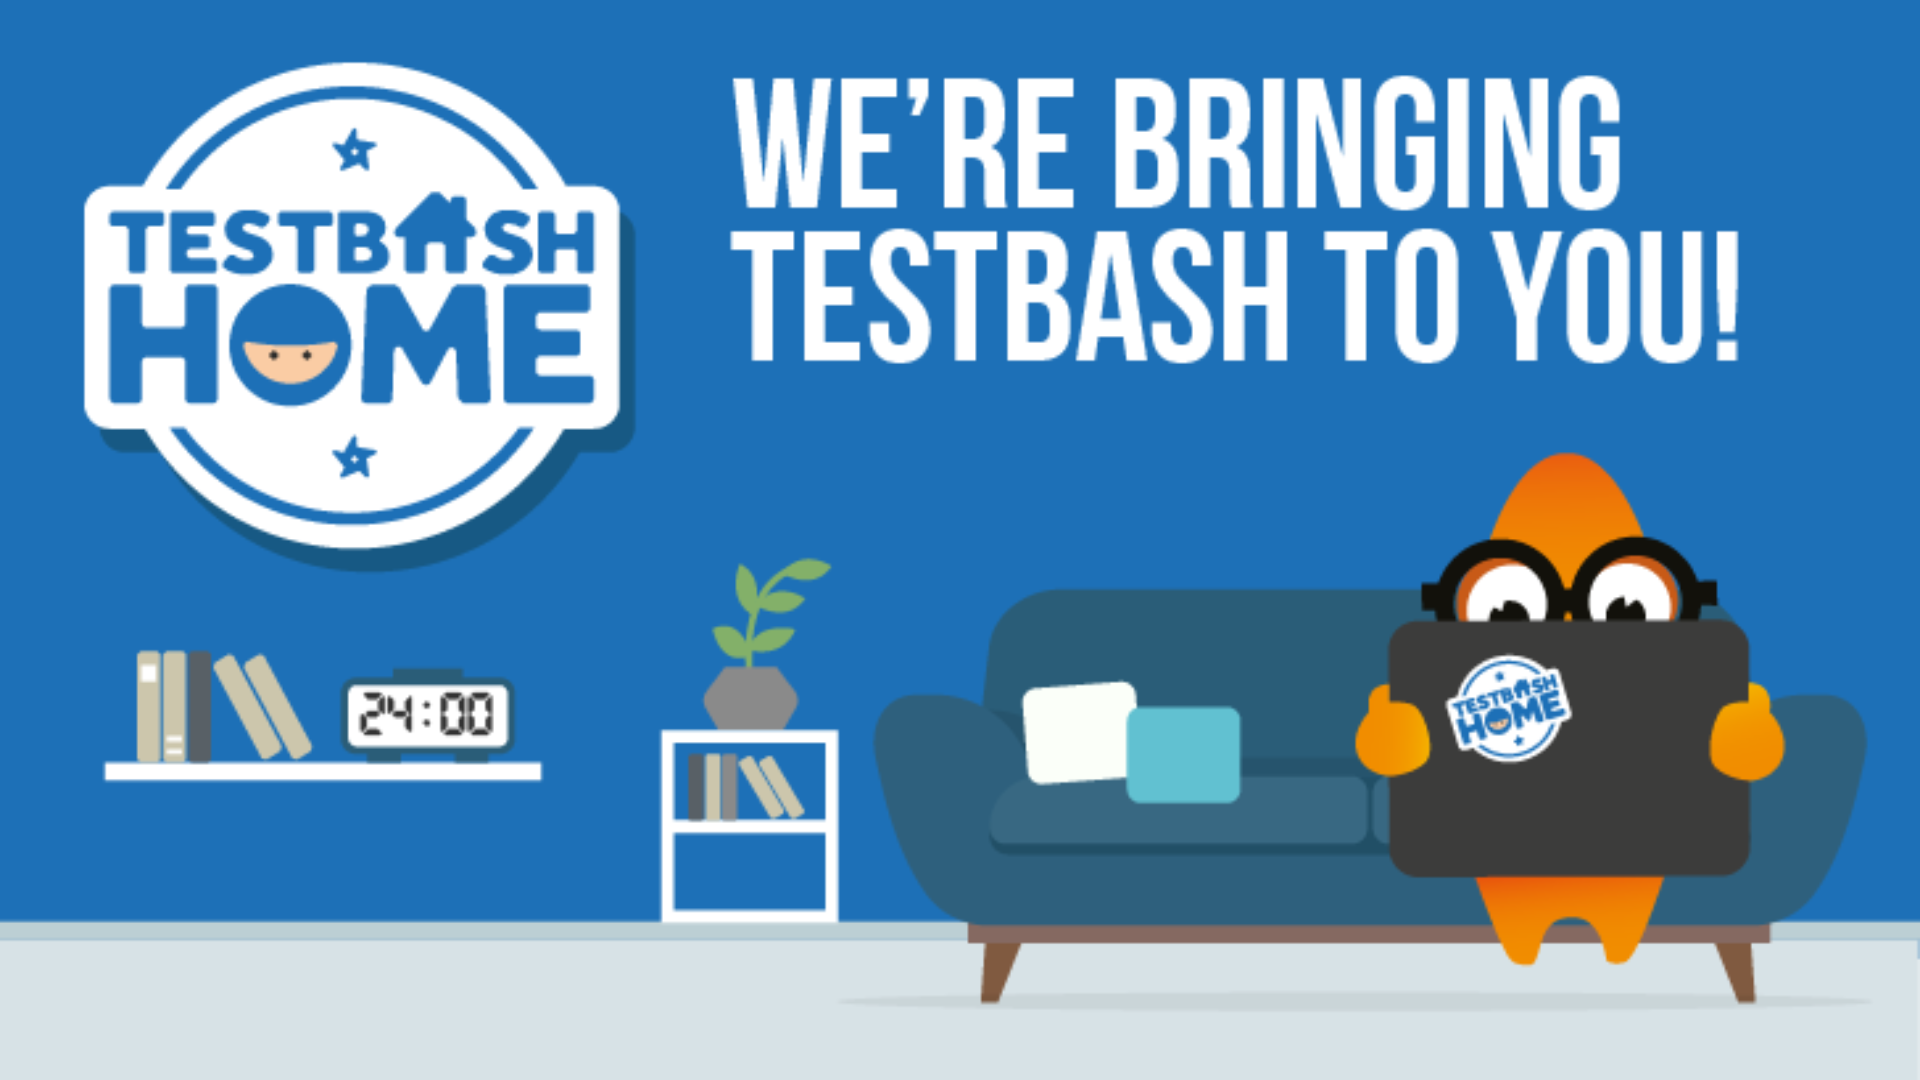 TestBash Home 2020